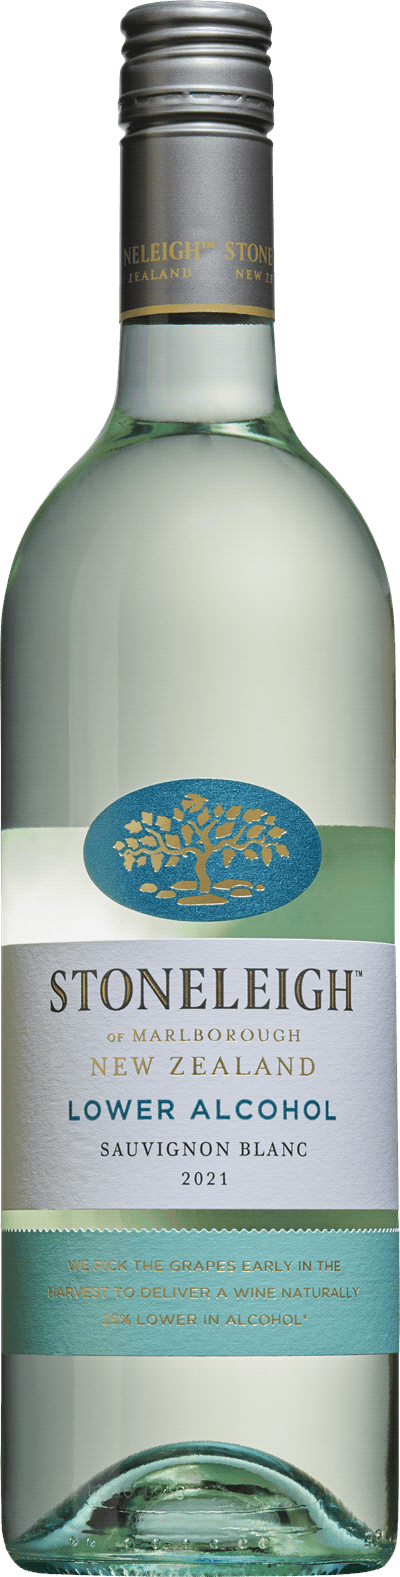 Stoneleigh Lower Alcohol Sauvignon Blanc